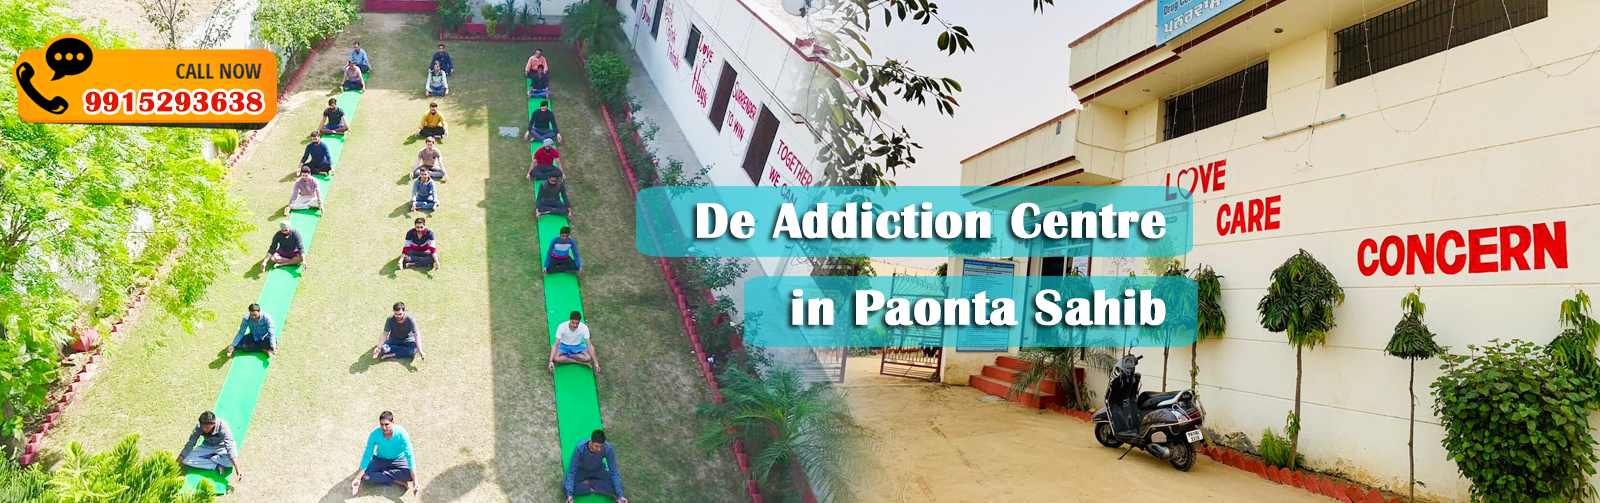 De Addiction Centre in Paonta Sahib